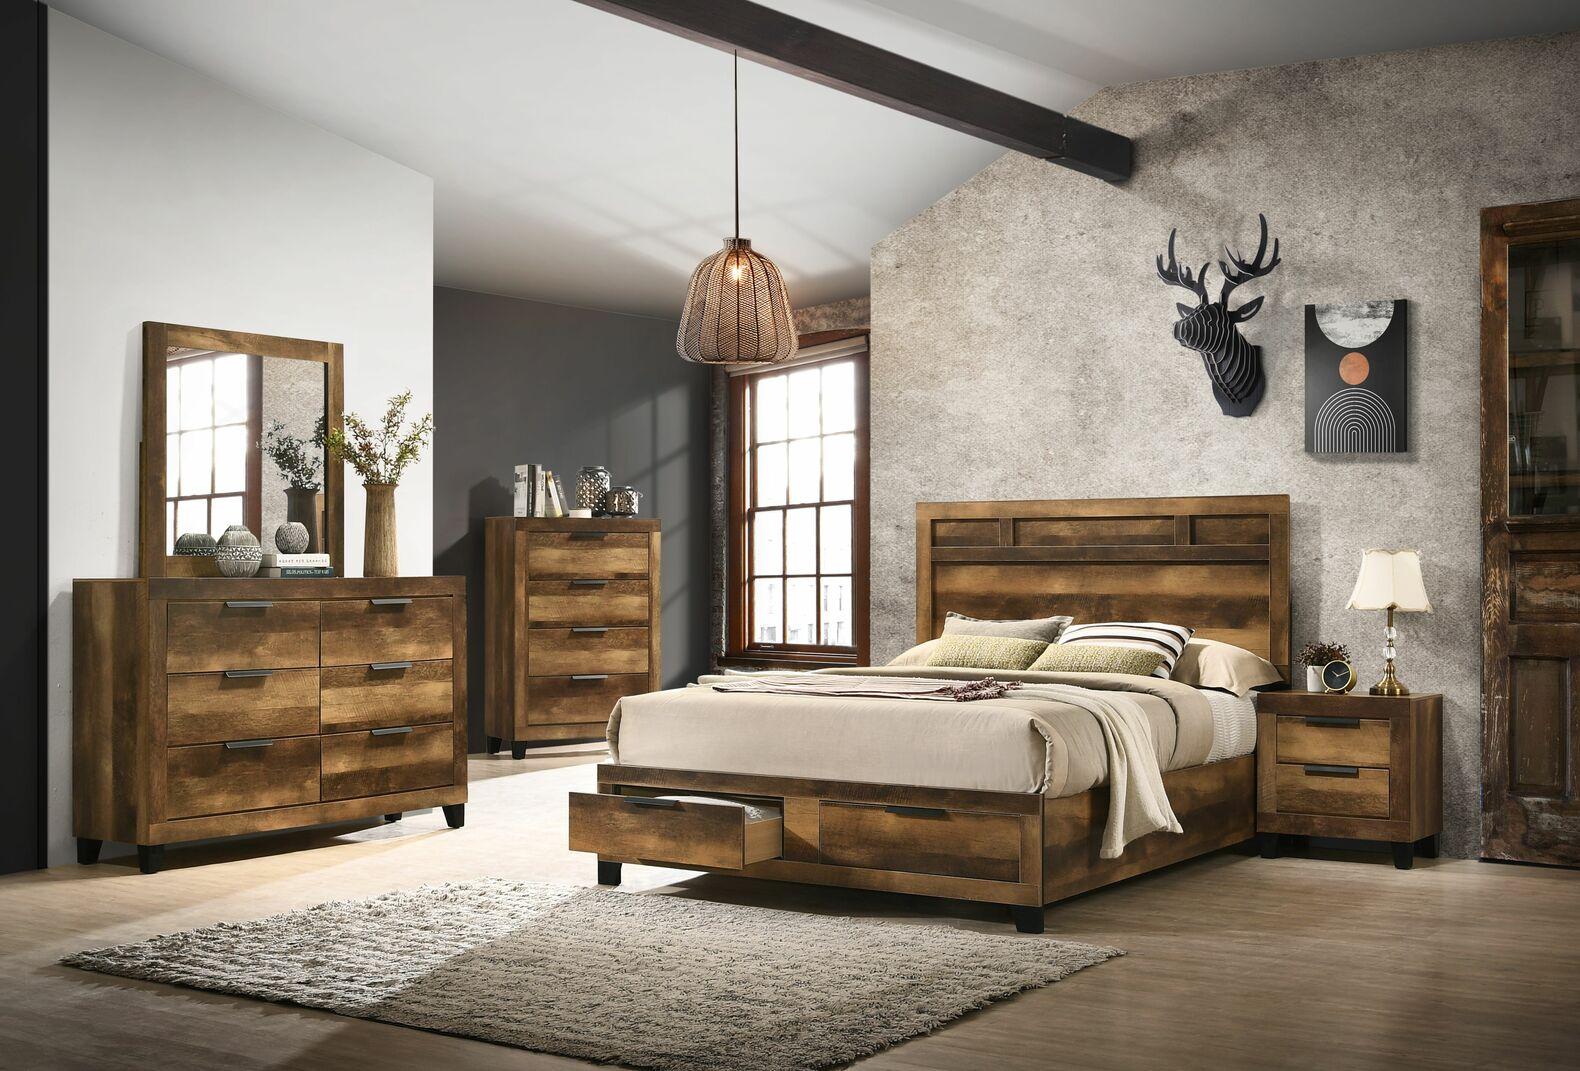 Rustic Bedroom Set Morales 28590Q-6pcs in Rustic Brown 